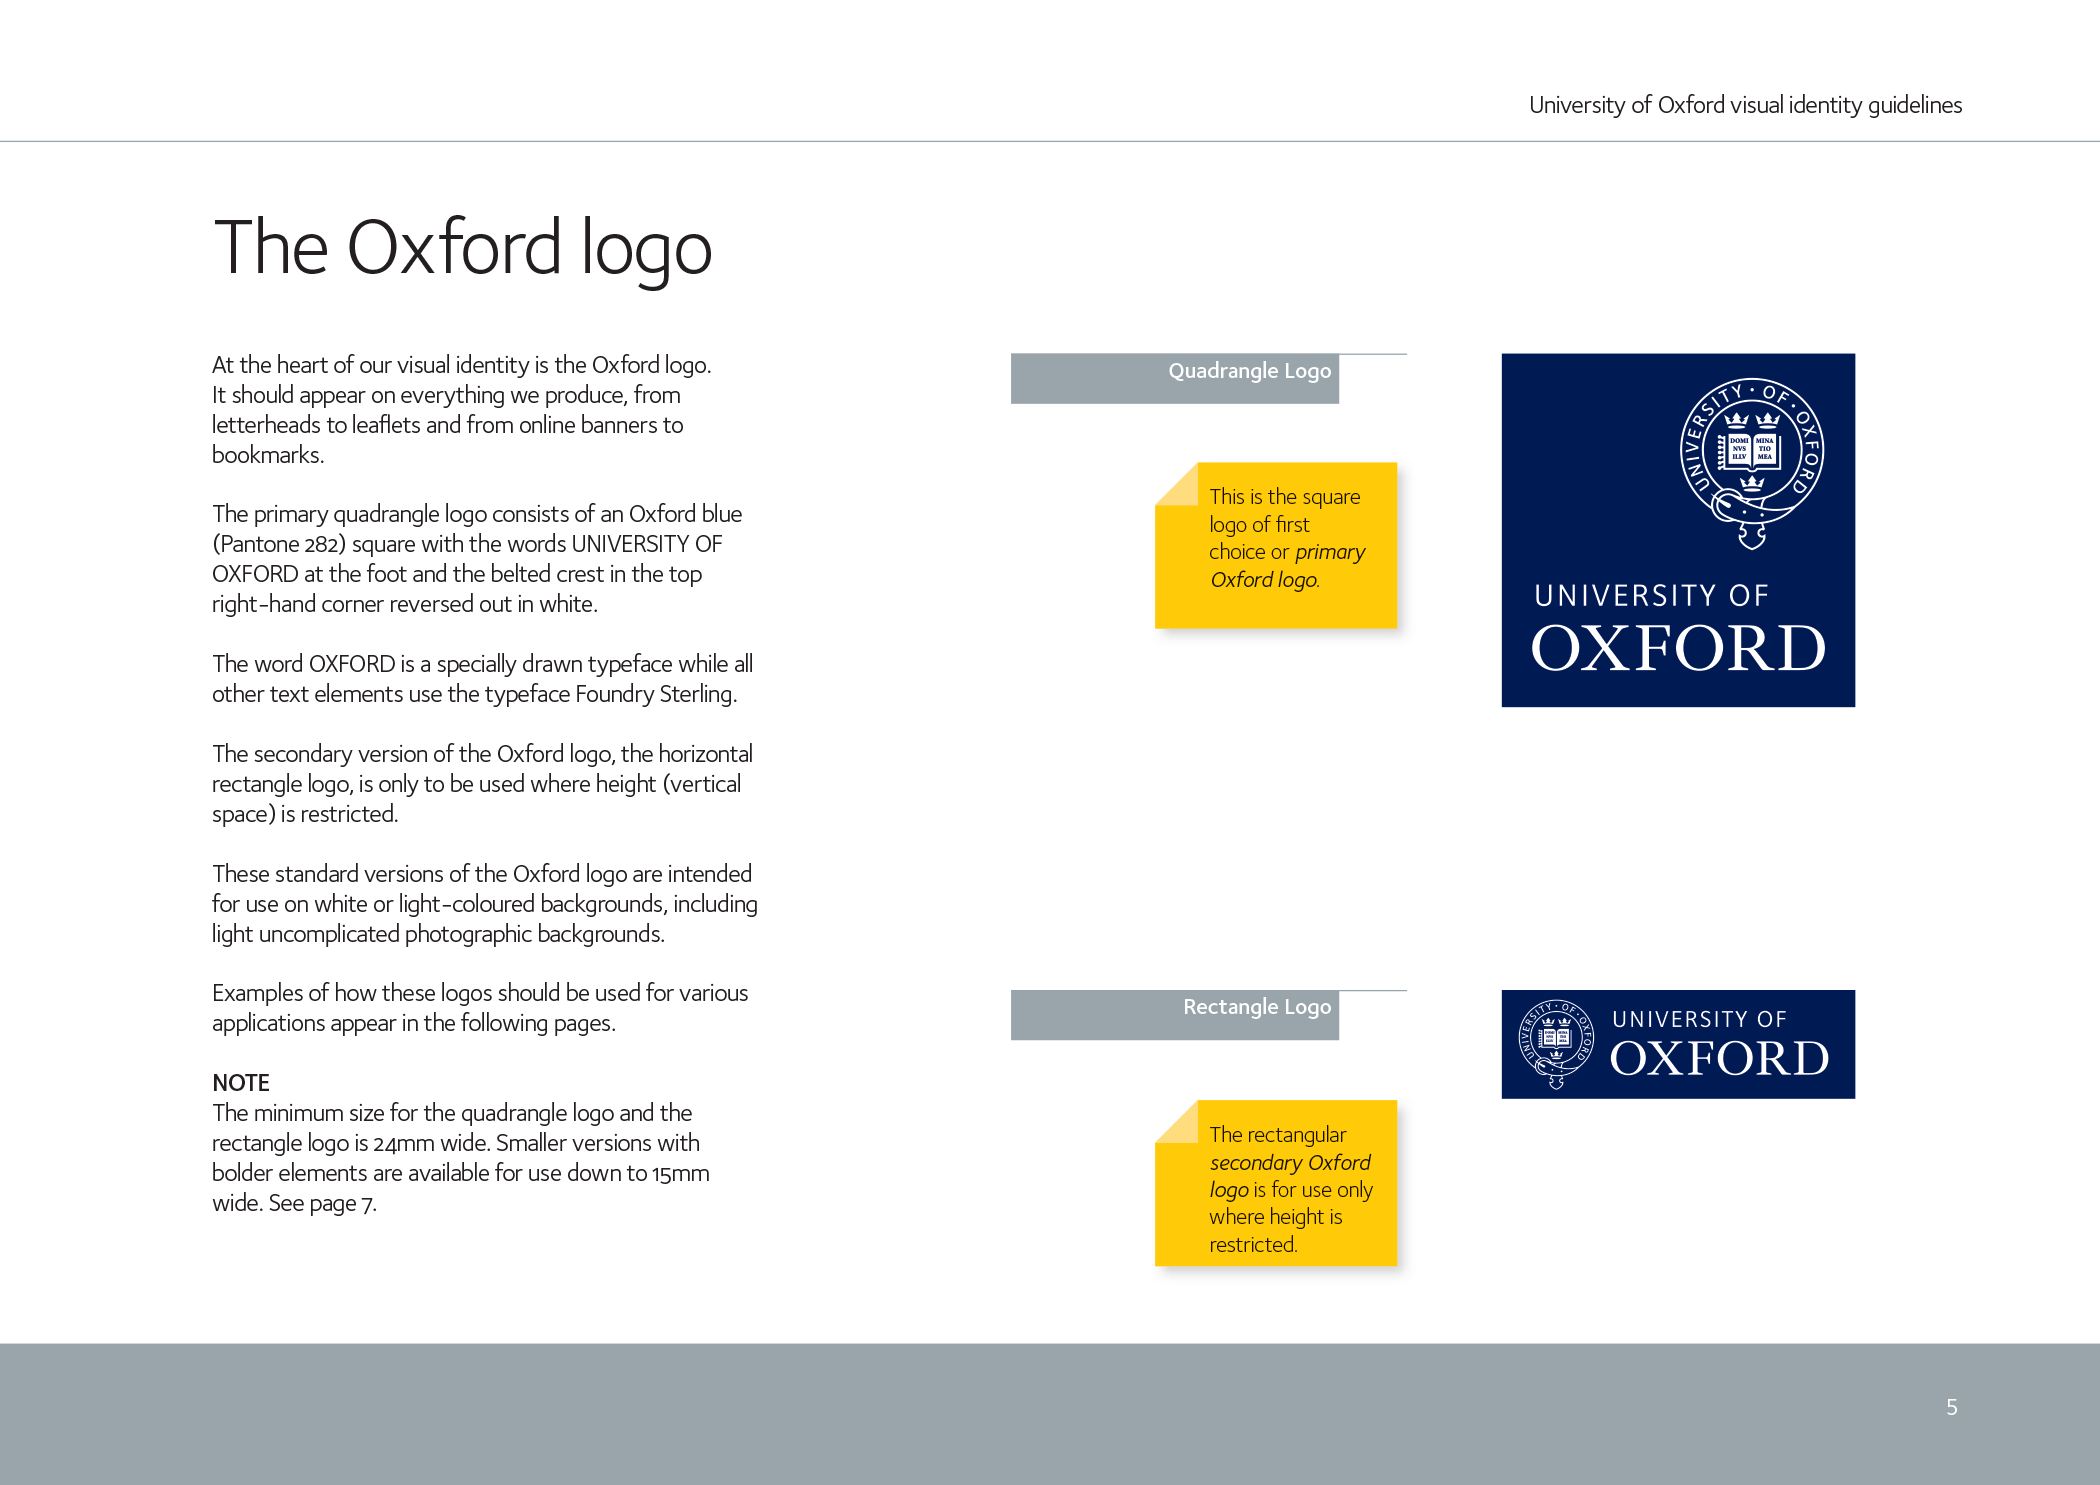 Universityofoxford Logo - University of Oxford visual identity